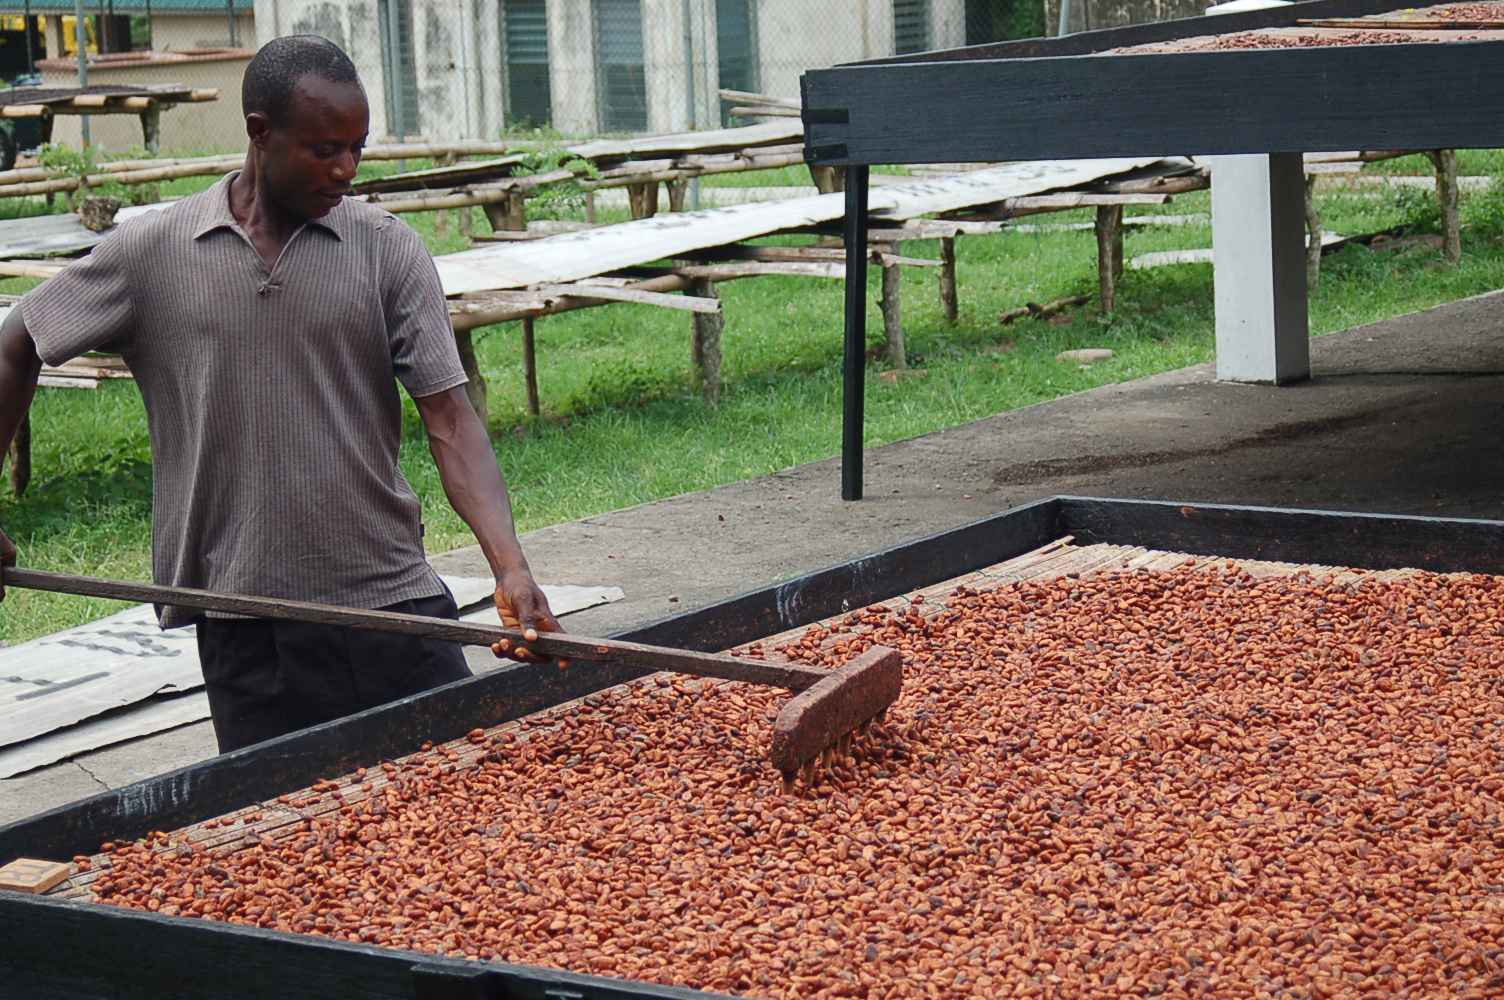 Los dos mayores exportadores de cacao del mundo -Ghana y Côte d'Ivoire- están trabajando juntos. The world's two largest cocoa exporters - Ghana and Côte d'Ivoire - are working together.